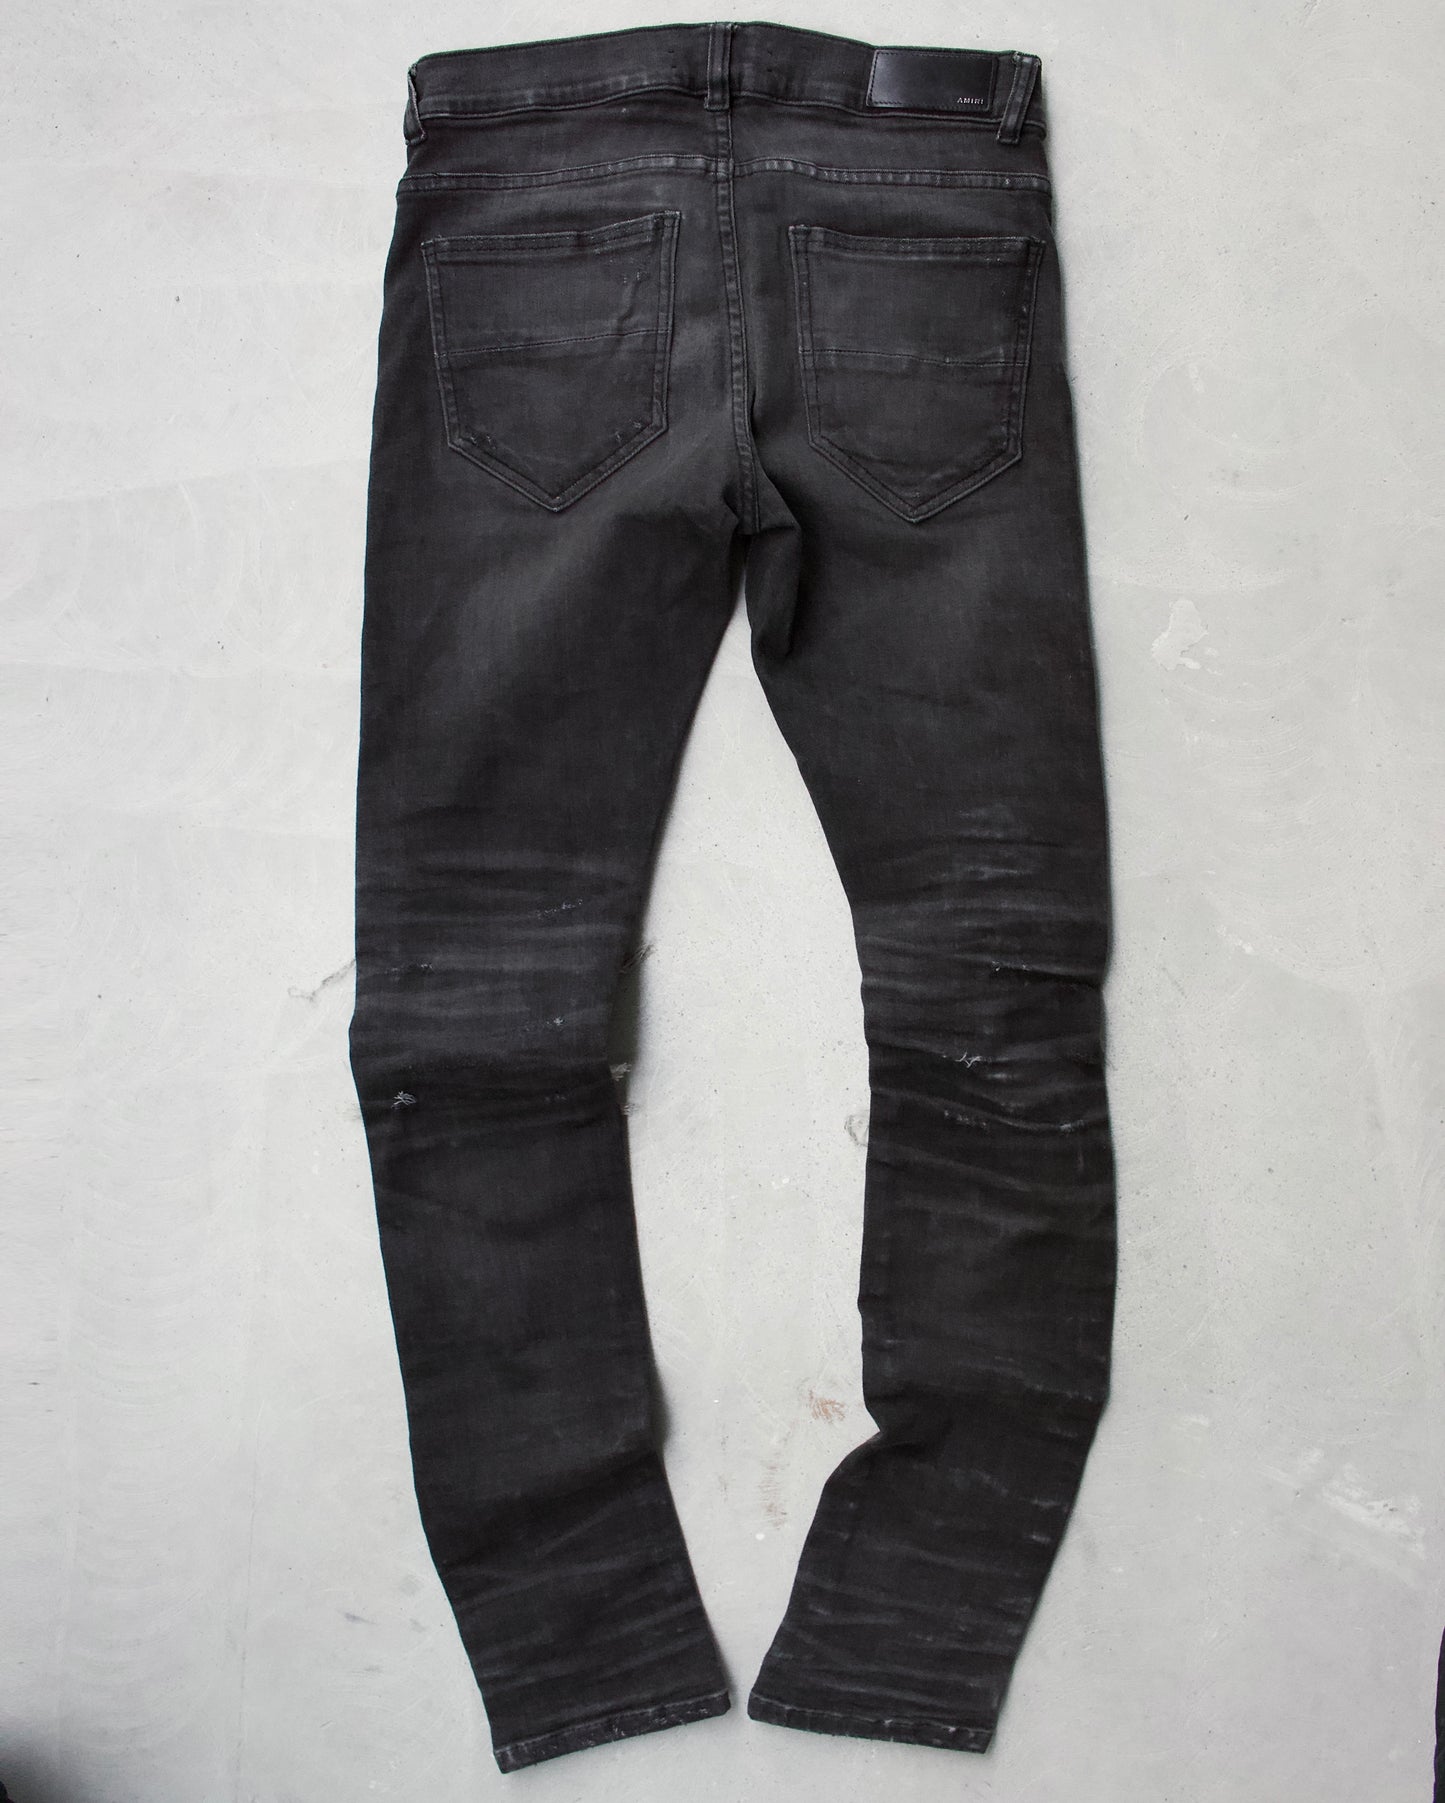 Amiri SS16 Maxfield MX 1 Leather Patch Jeans